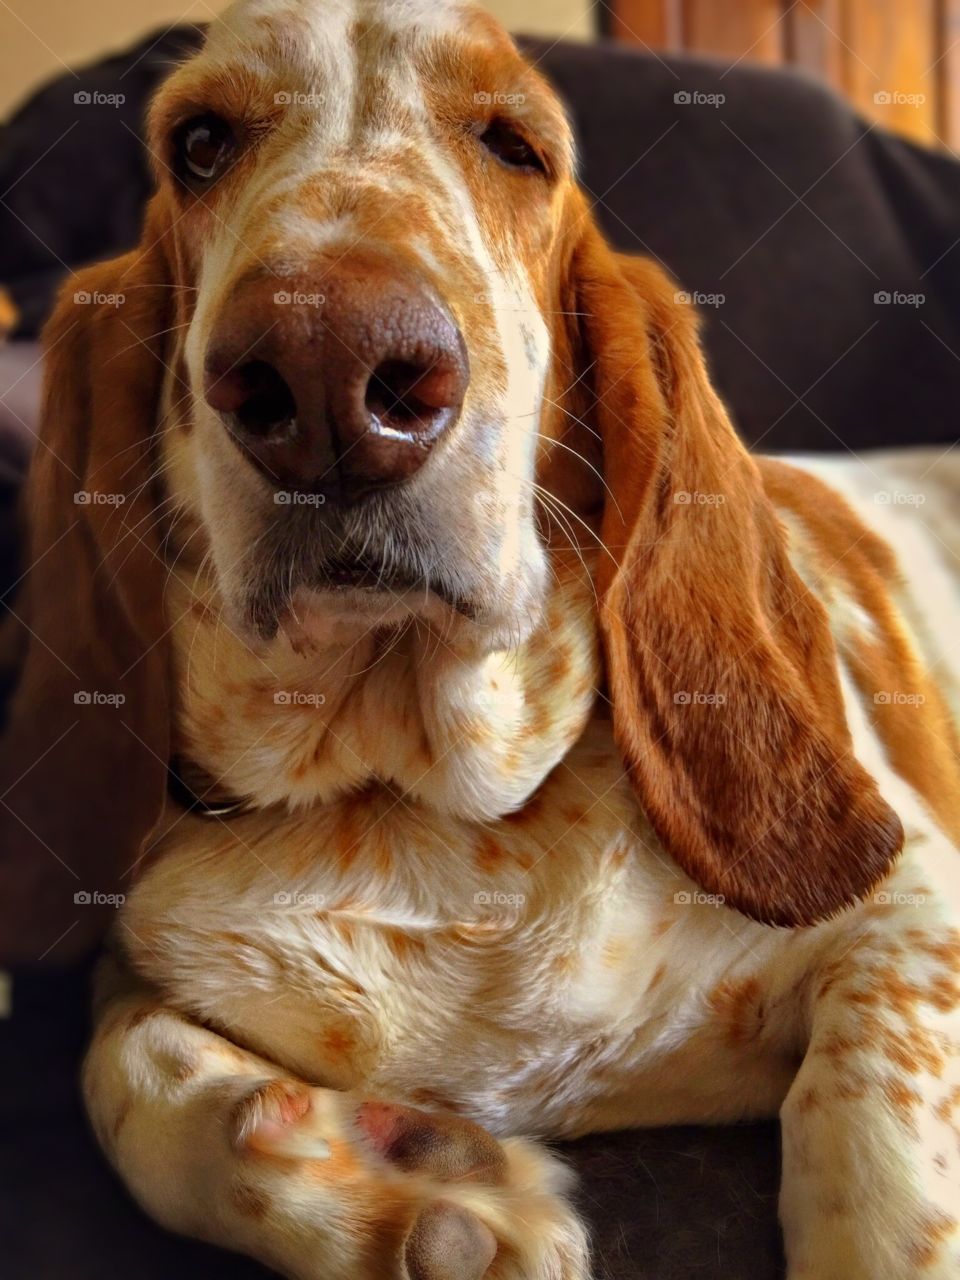 My Williams the basset hound